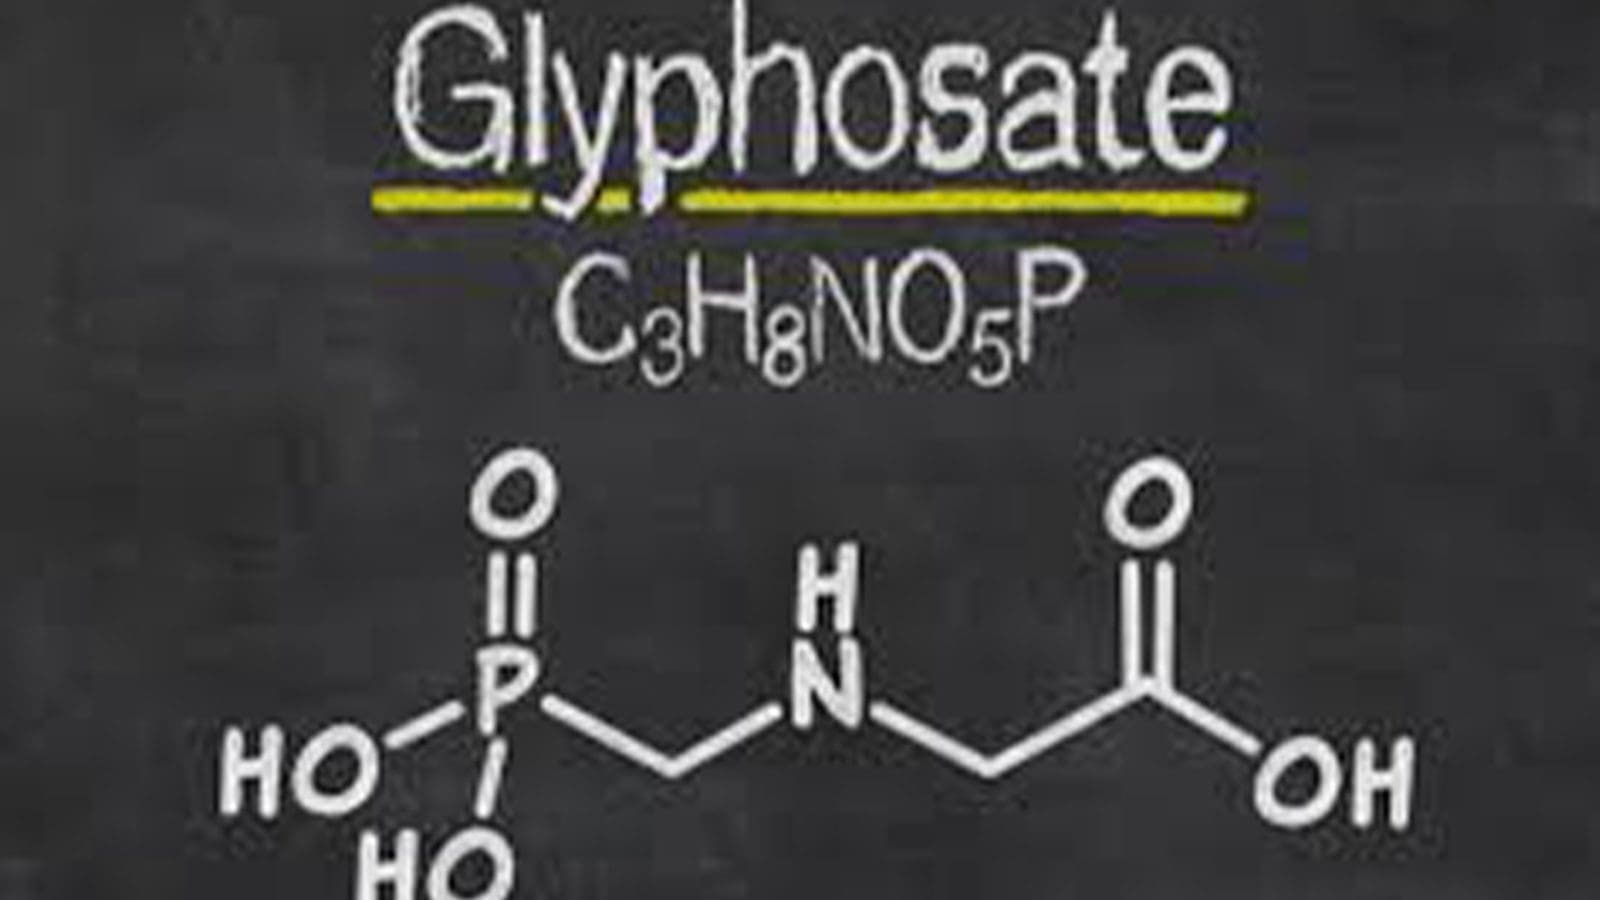 Glyphosate use sparks debate in Morocco